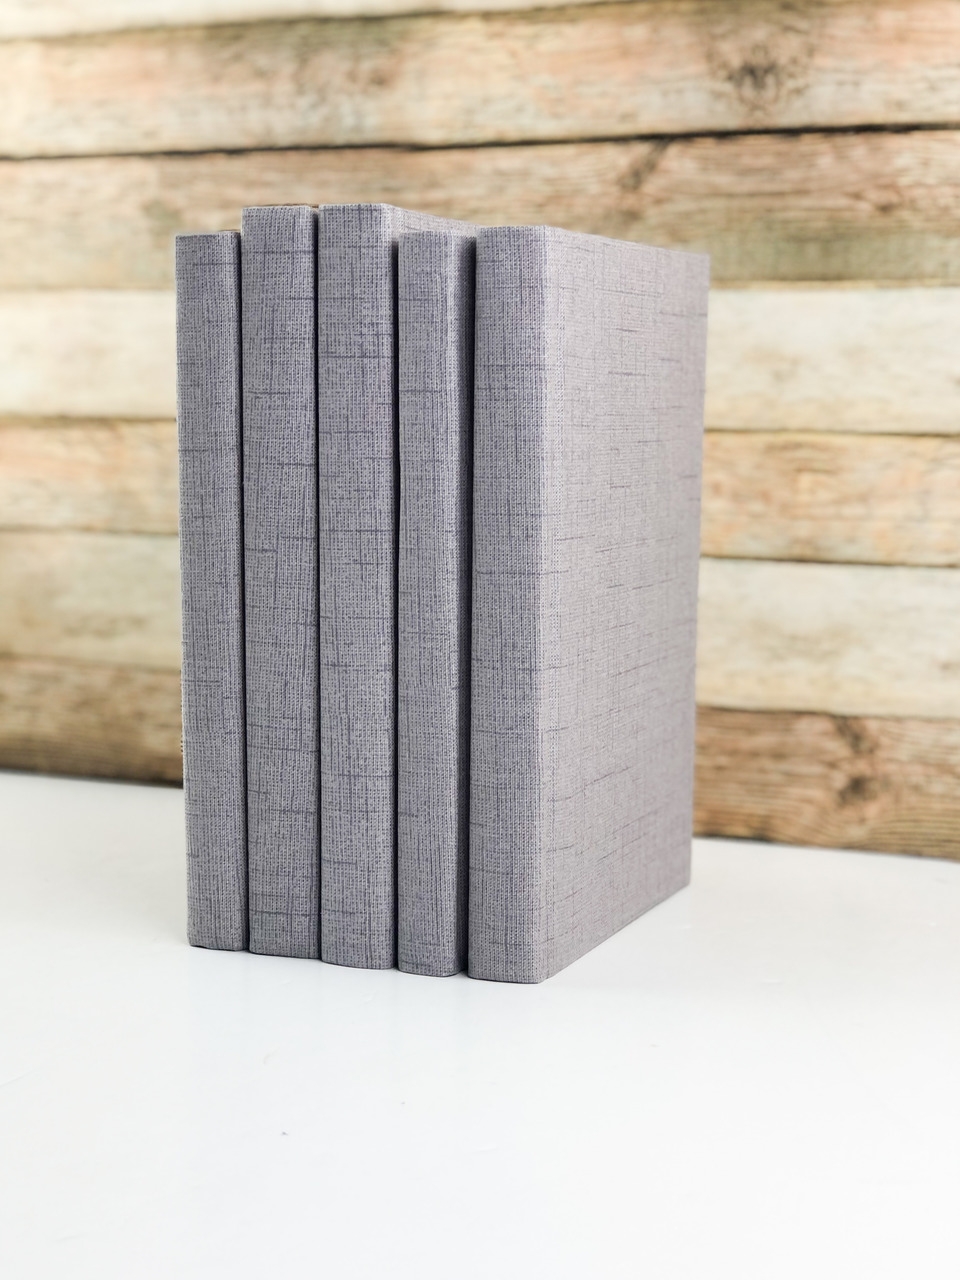 Decorative Books, Textured Gray, Set of 3 - Image 1